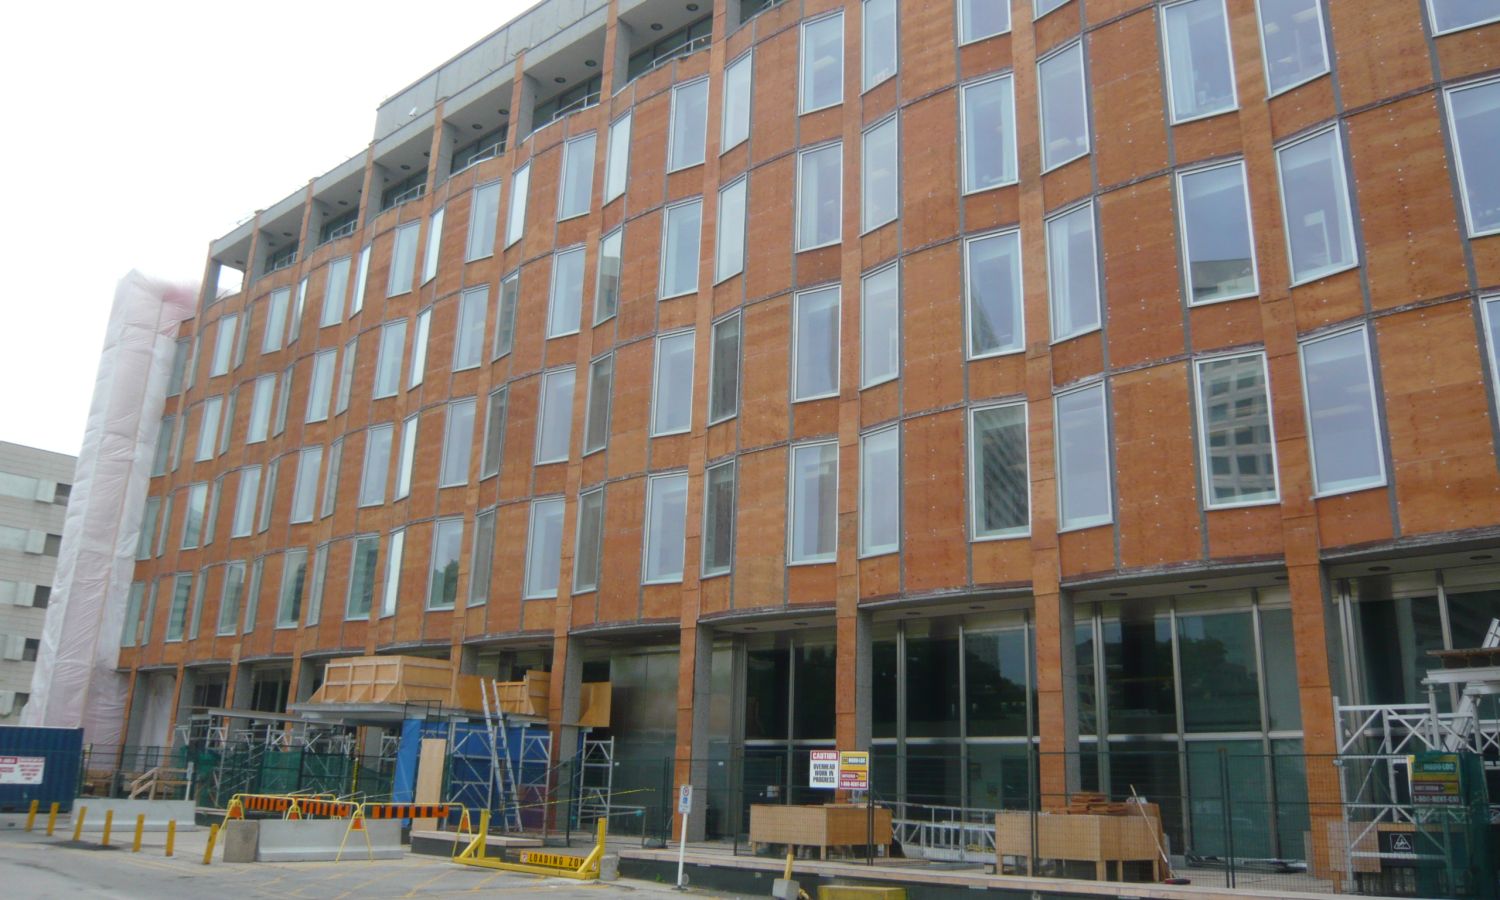 Exterior envelope improvements, Workers Compensation Building, 1x1 Architecture and A49 (image source: Winnipeg Architecture Foundation)